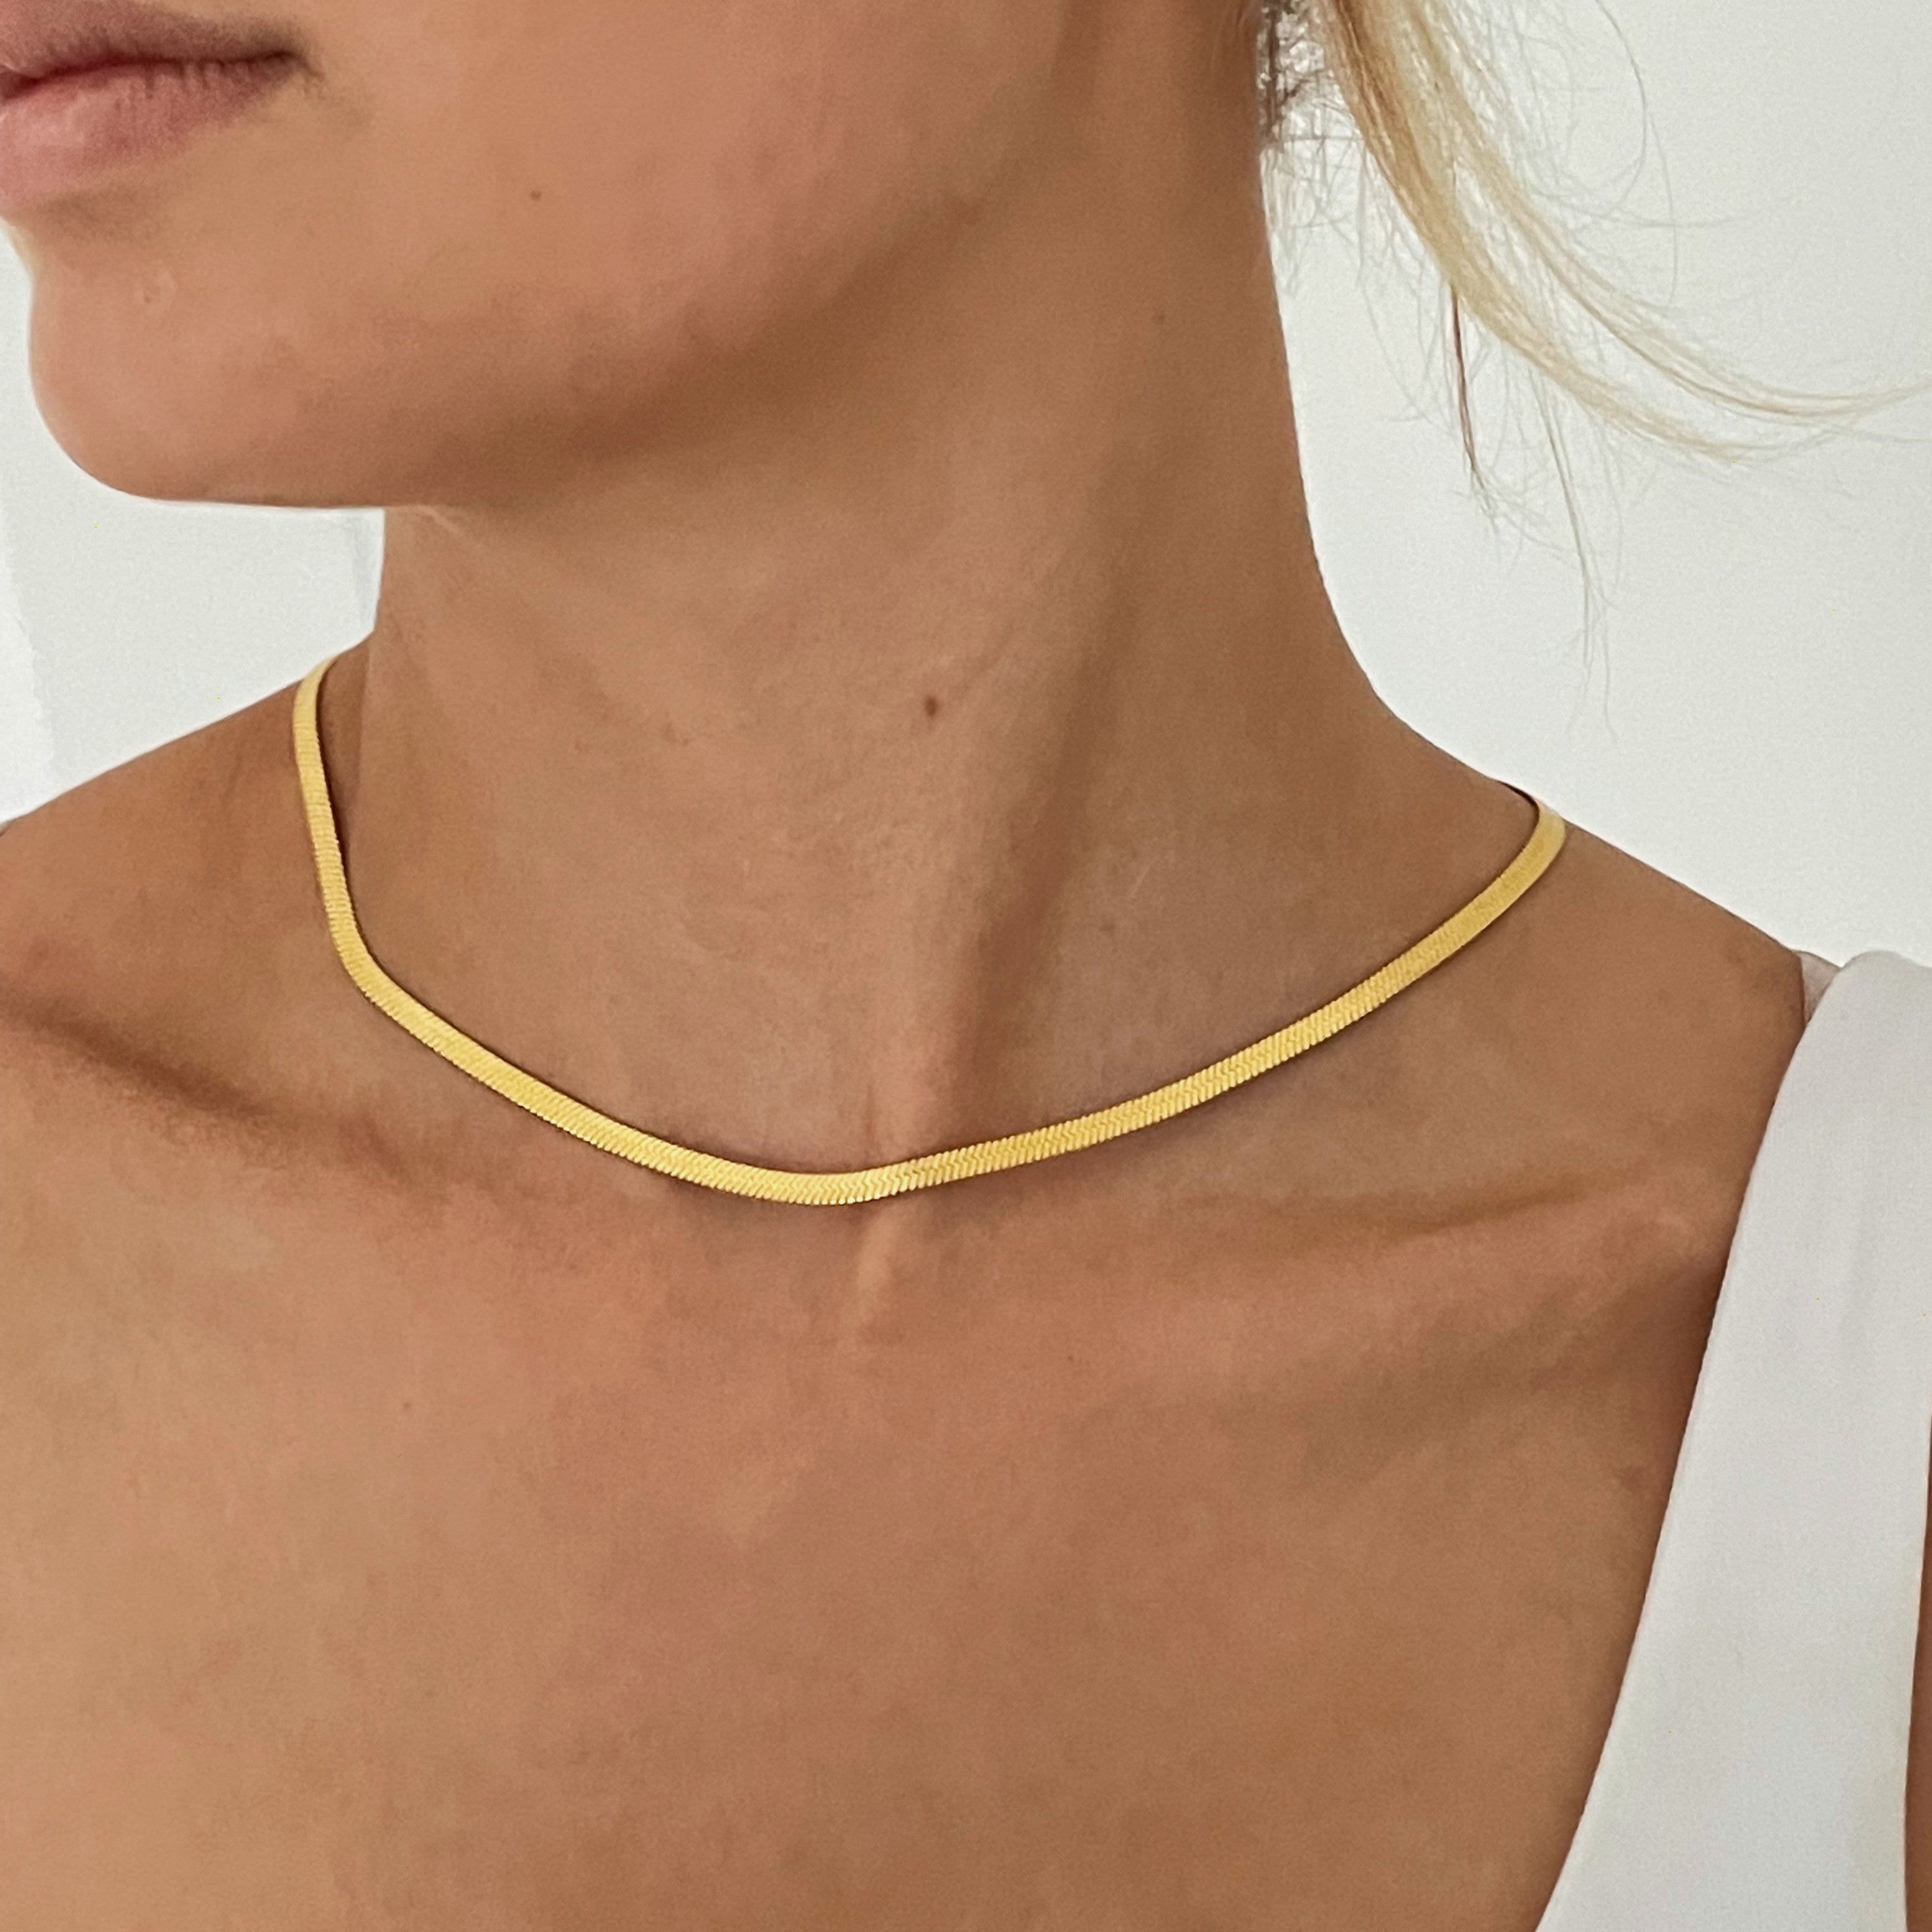 Trendy gold herringbone statement necklace